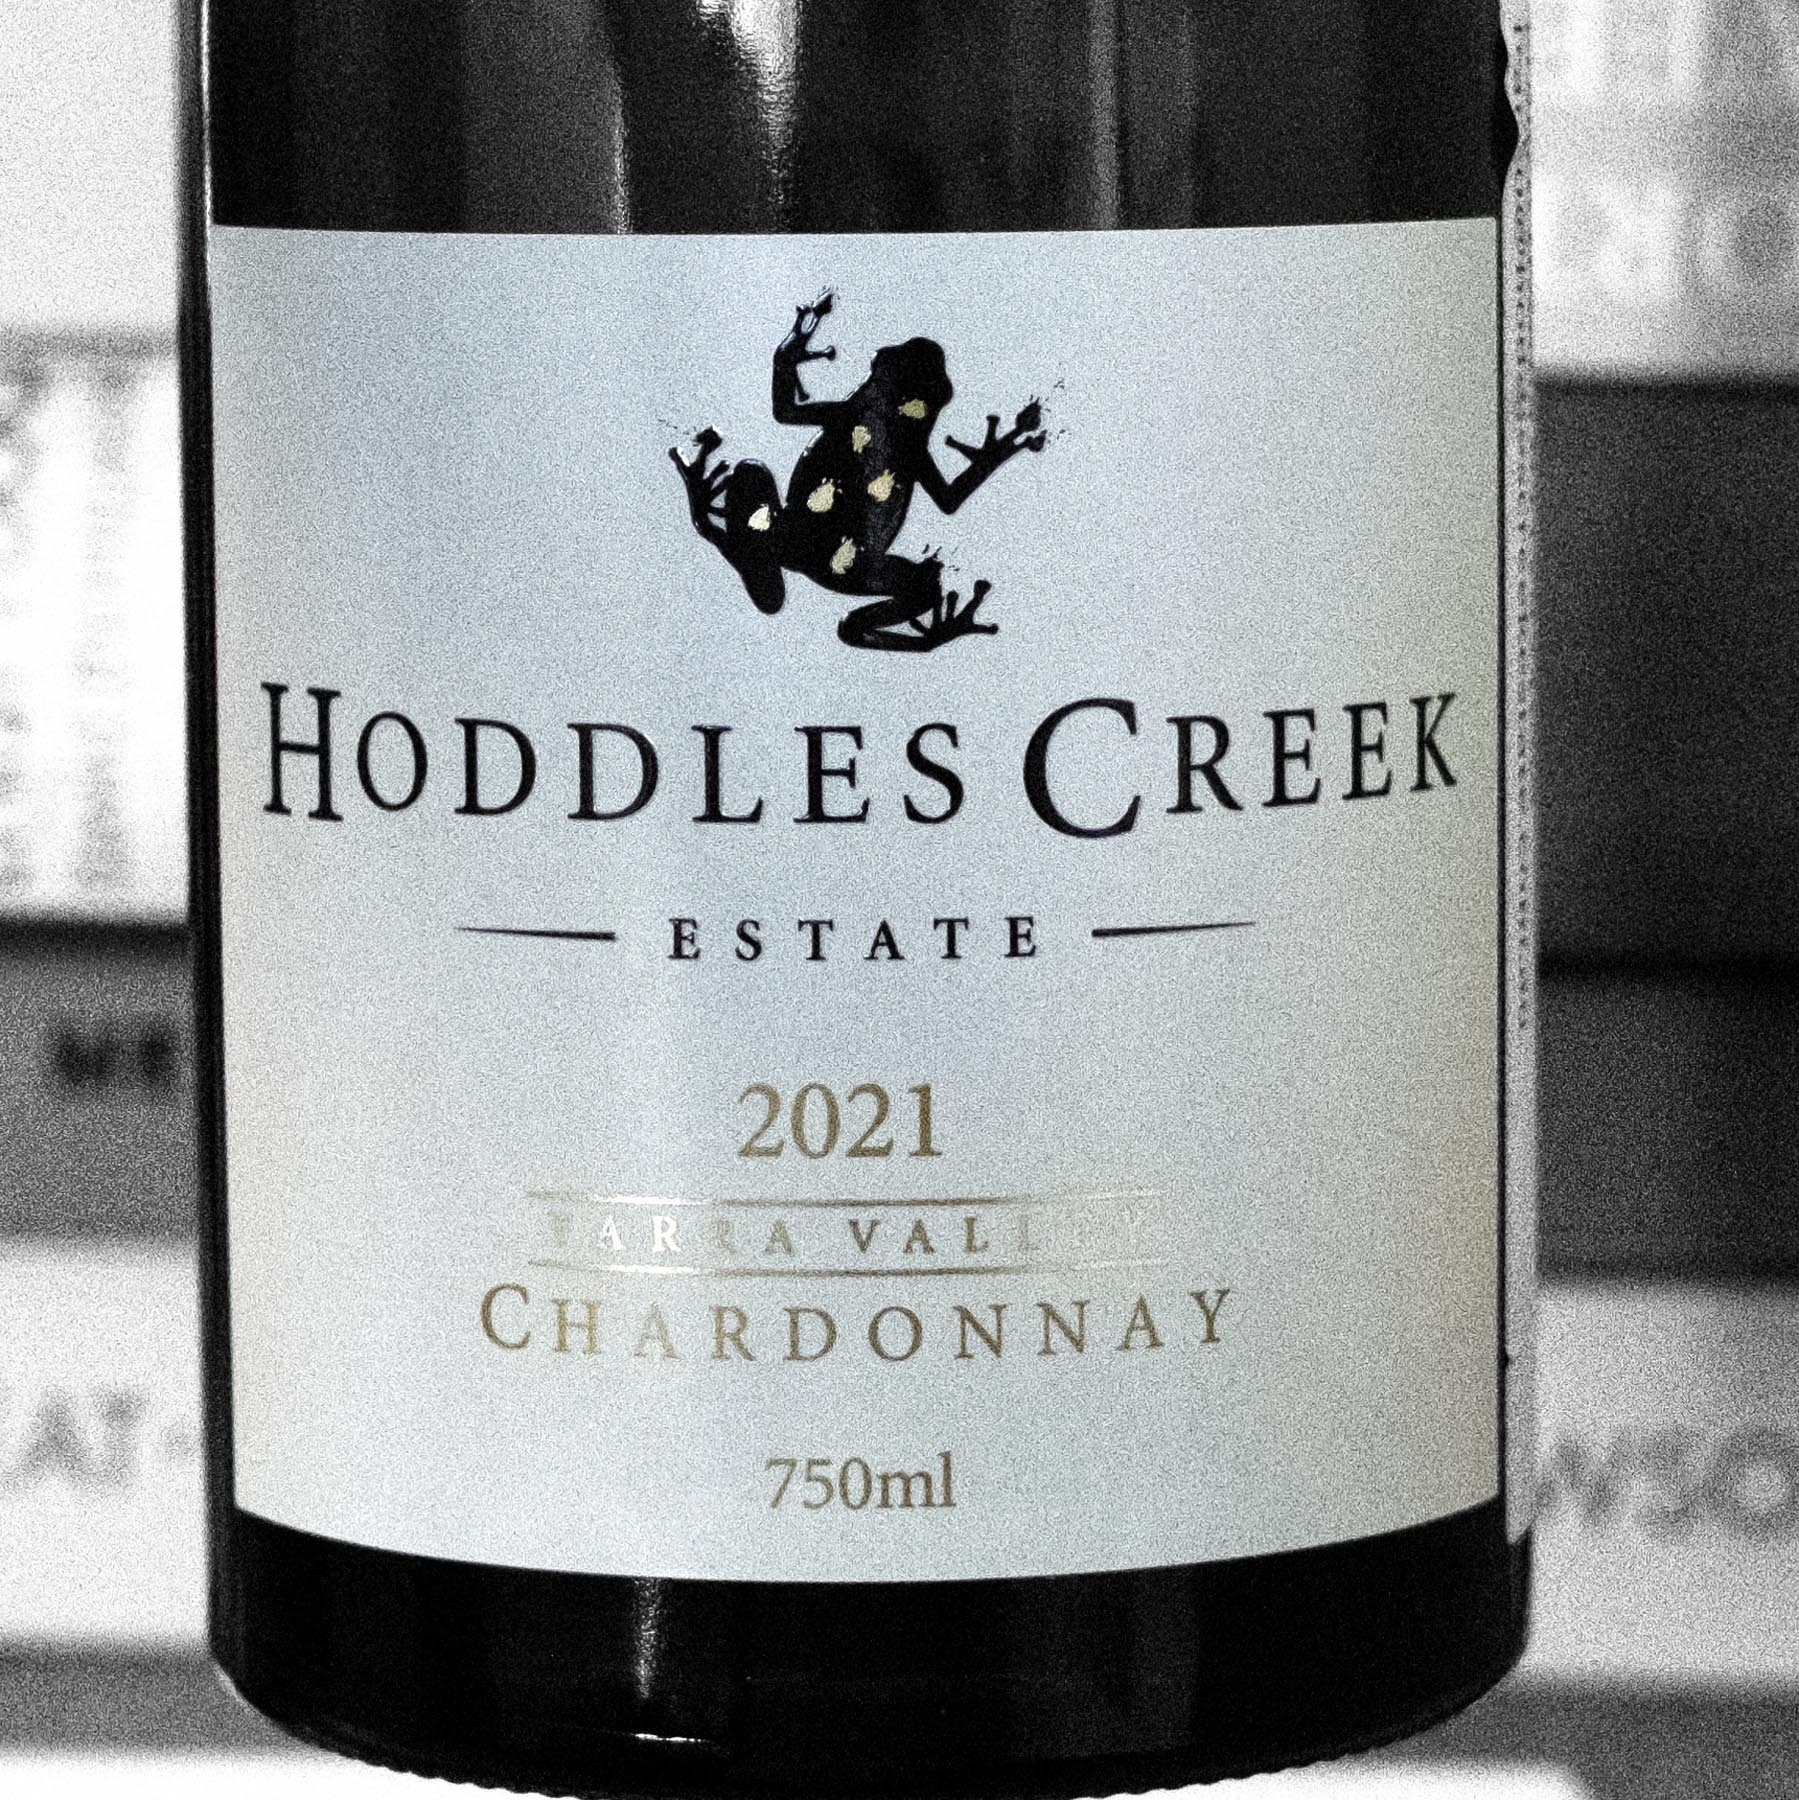 Hoddle's Creek Estate Chardonnay 2021 Yarra Valley, Vic